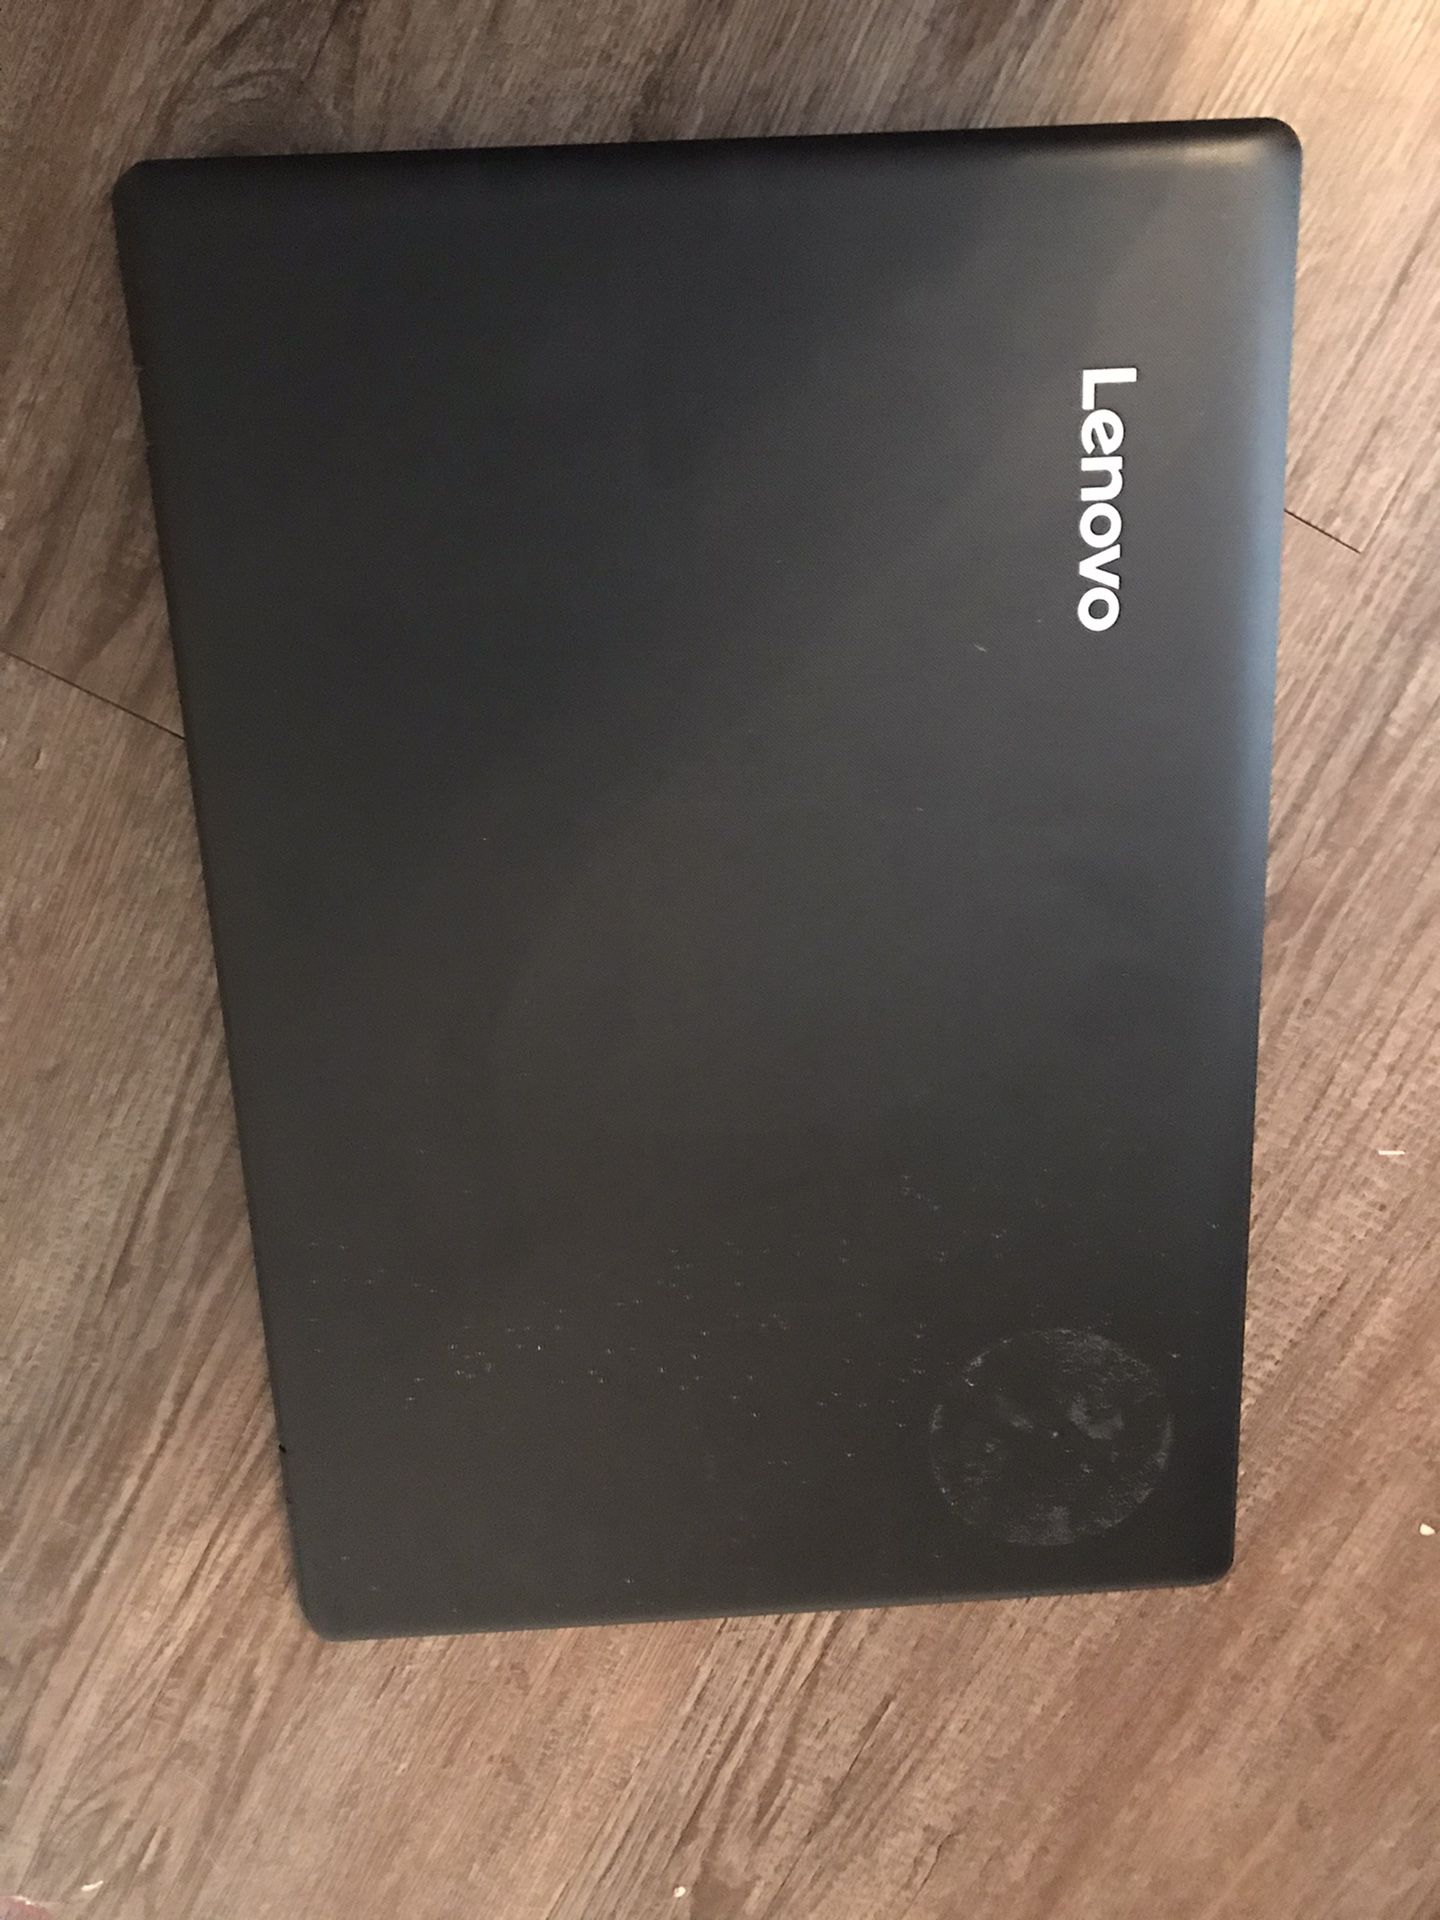 Lenovo Laptop and Case